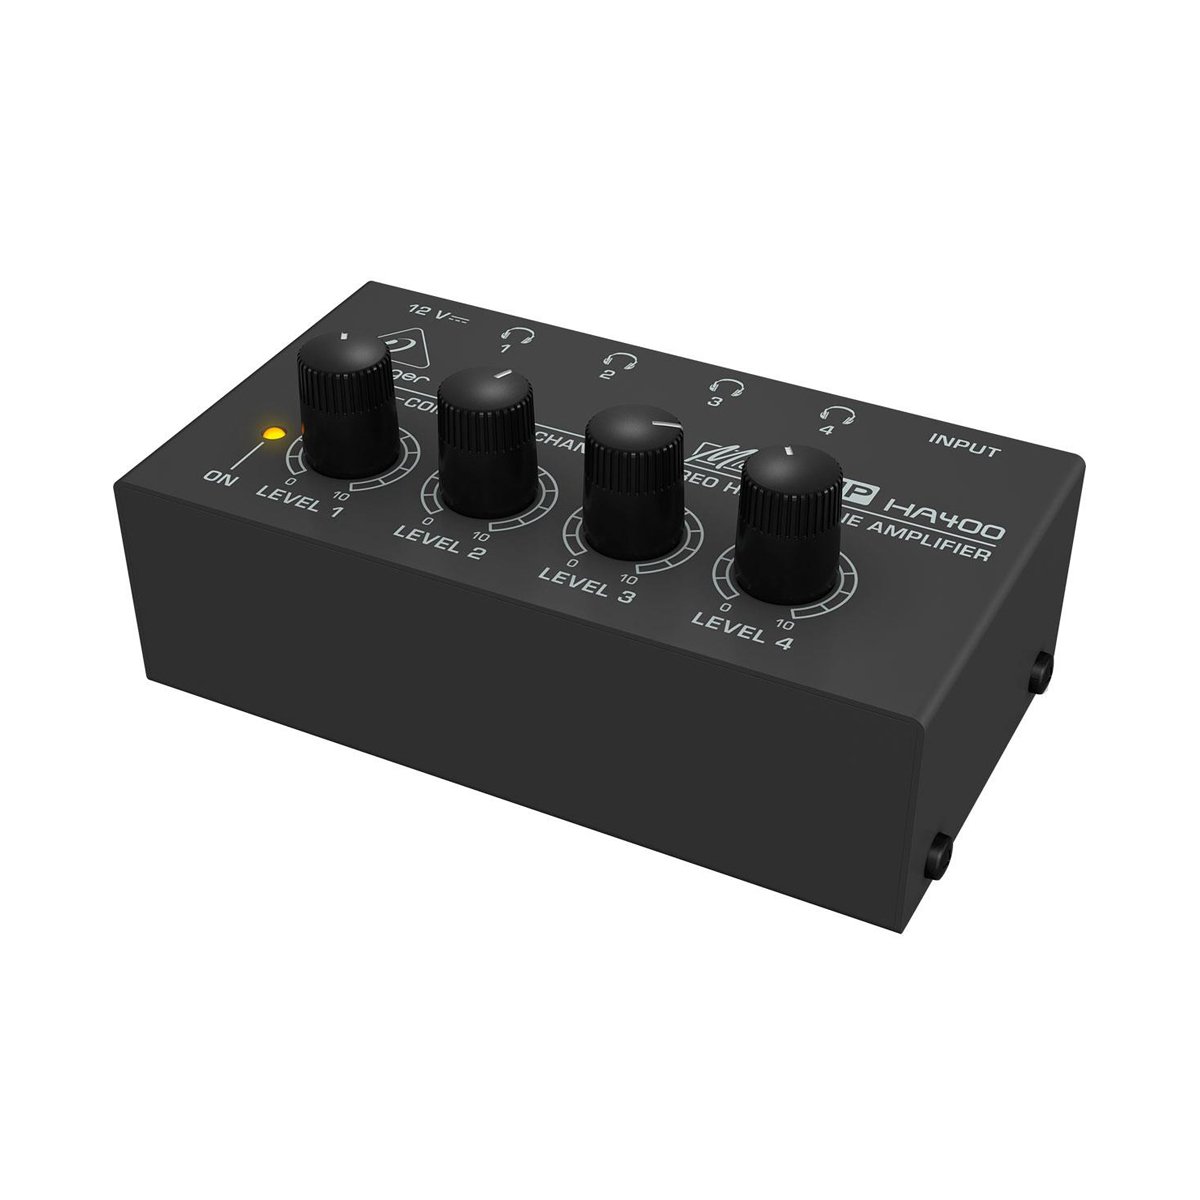 Amplificador para Aud&iacute;fonos Mod. Ha400 Behringer